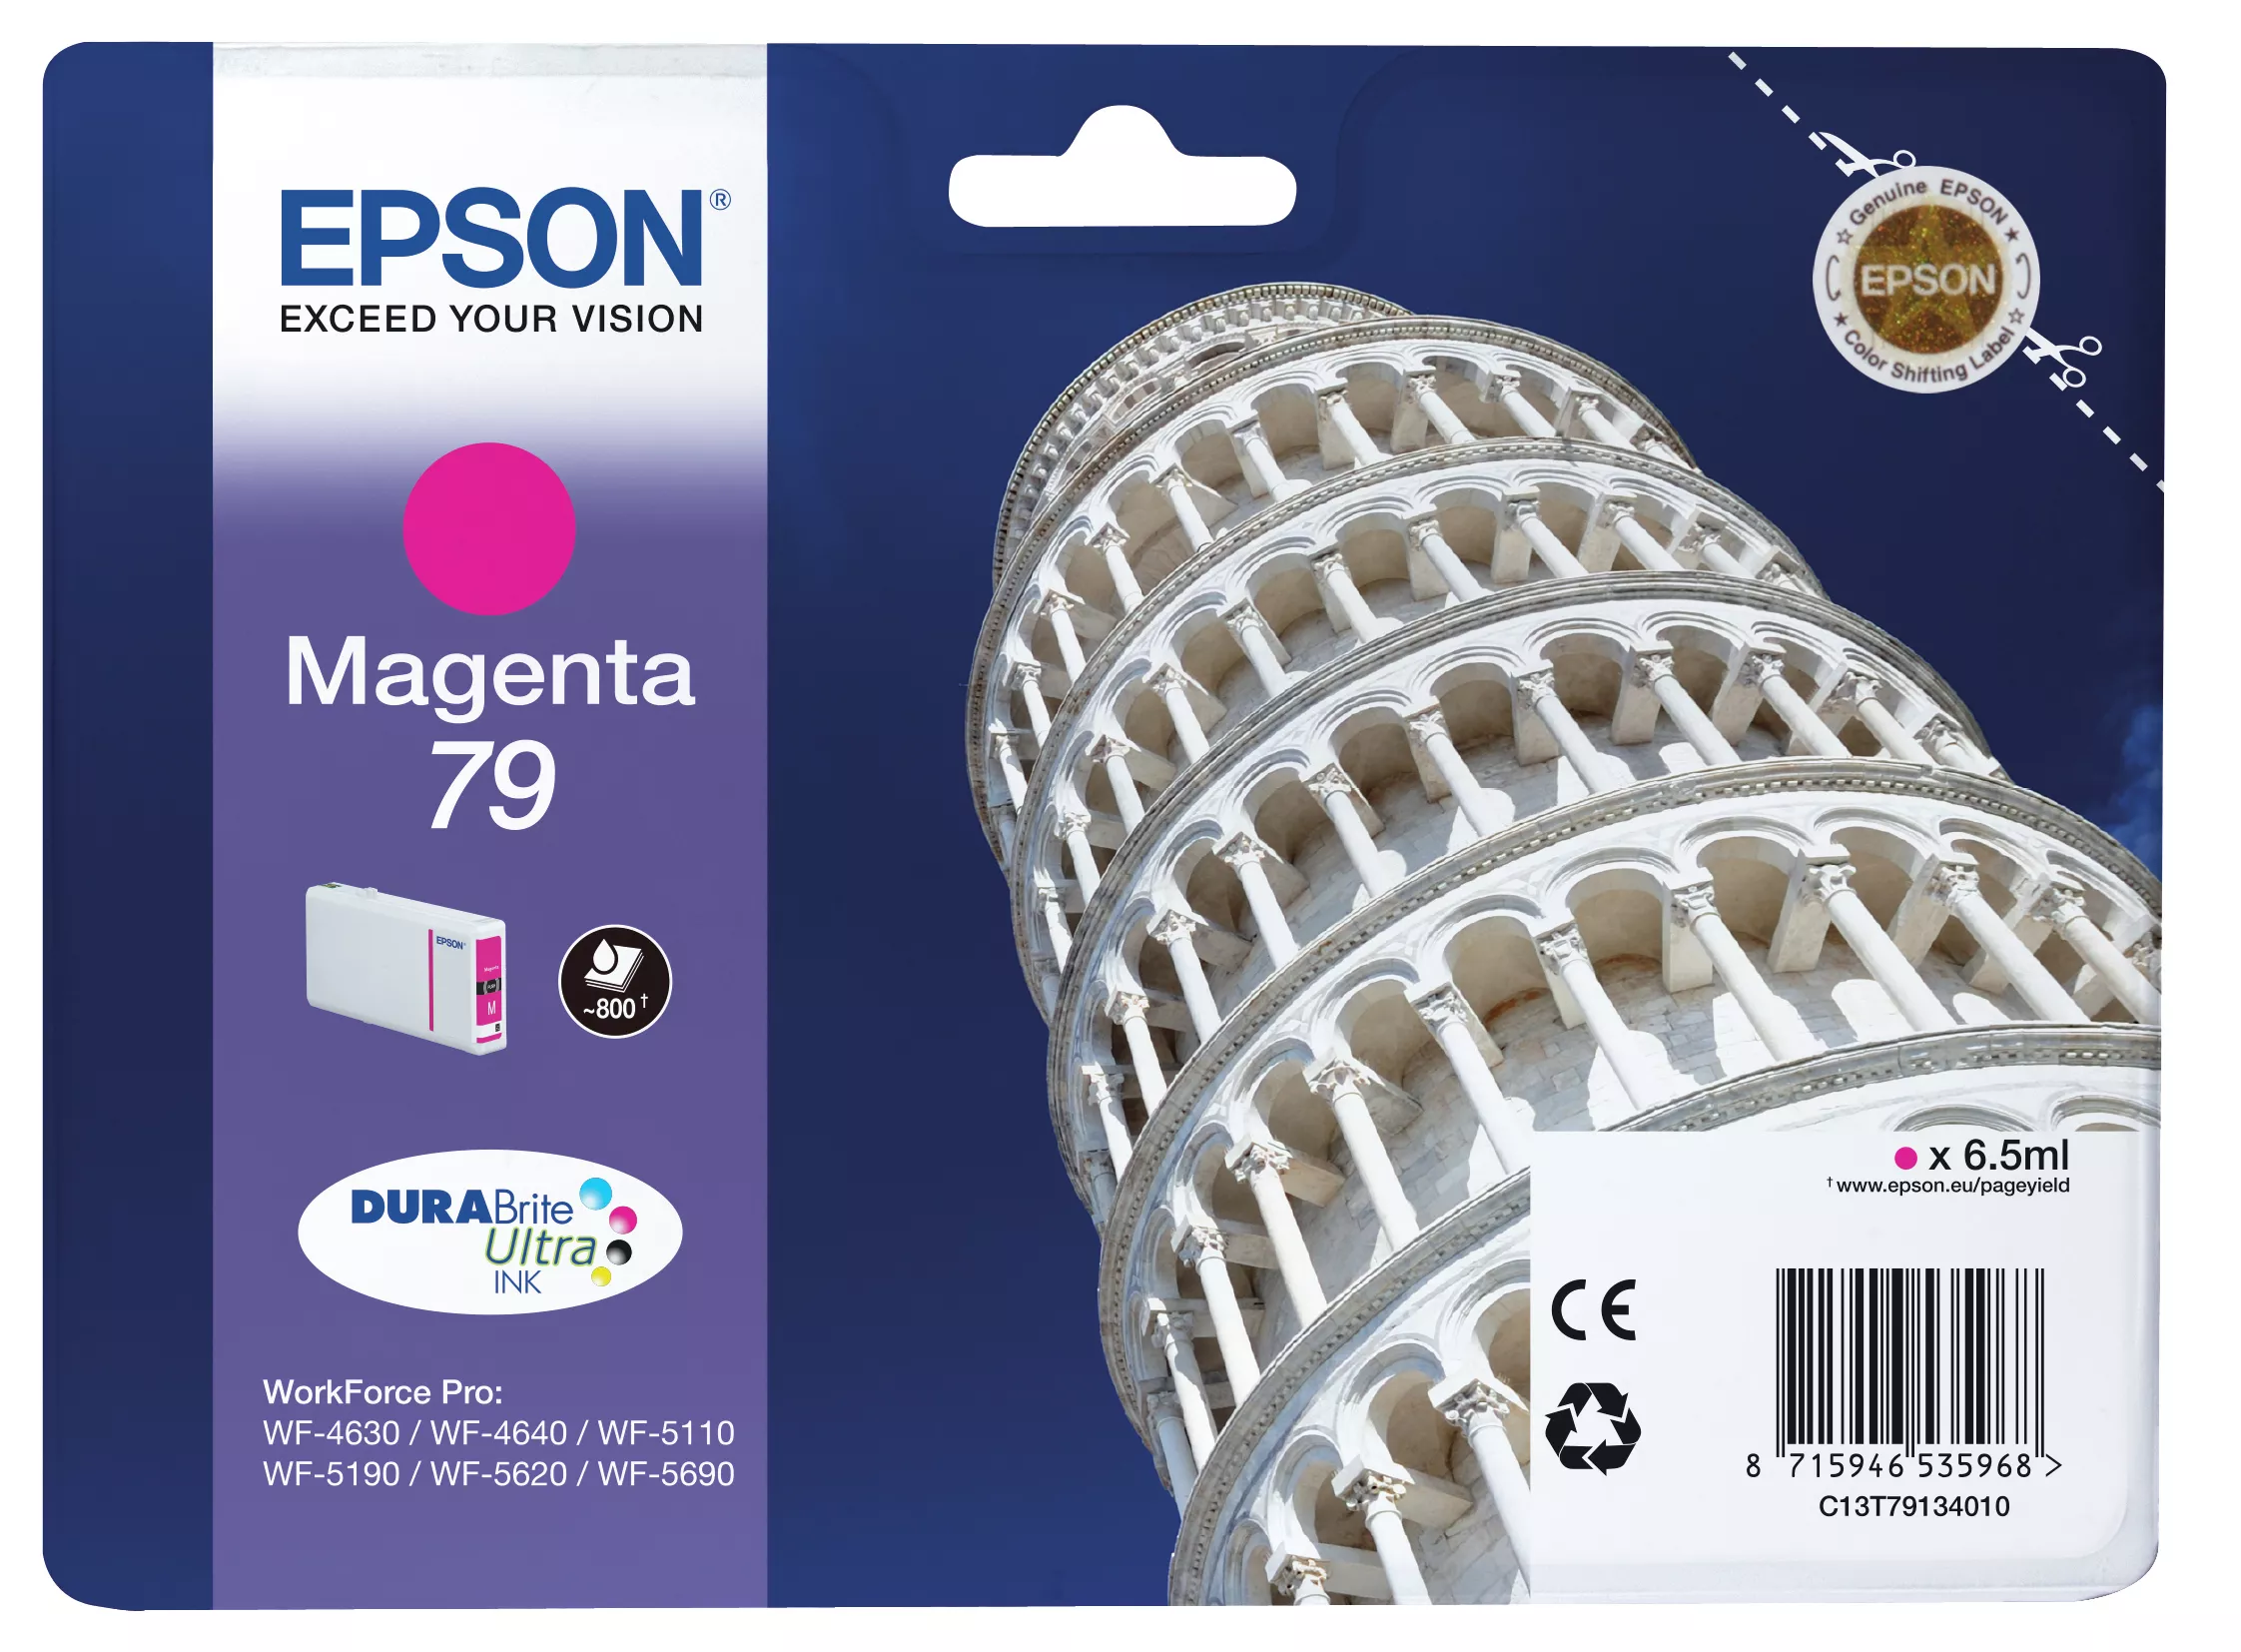 Achat EPSON 79 cartouche dencre magenta capacité standard 6.5ml - 8715946535968